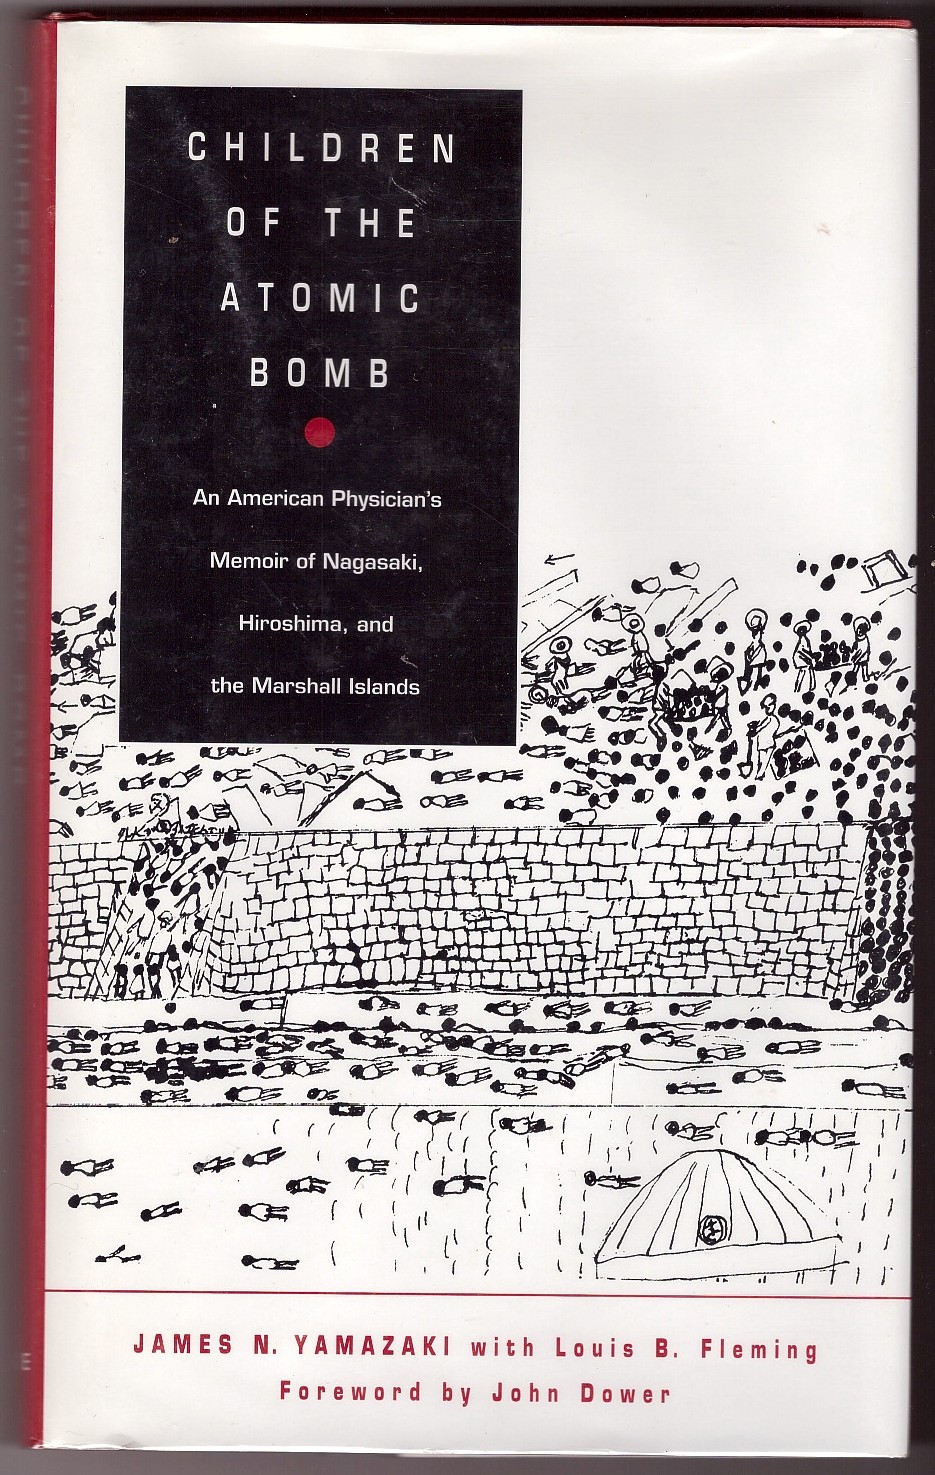 Children of the Atomic Bomb: An American Physician’s Memoir of Nagasaki, Hiroshima, and the Marshall Islands by James N. Yamazaki book cover